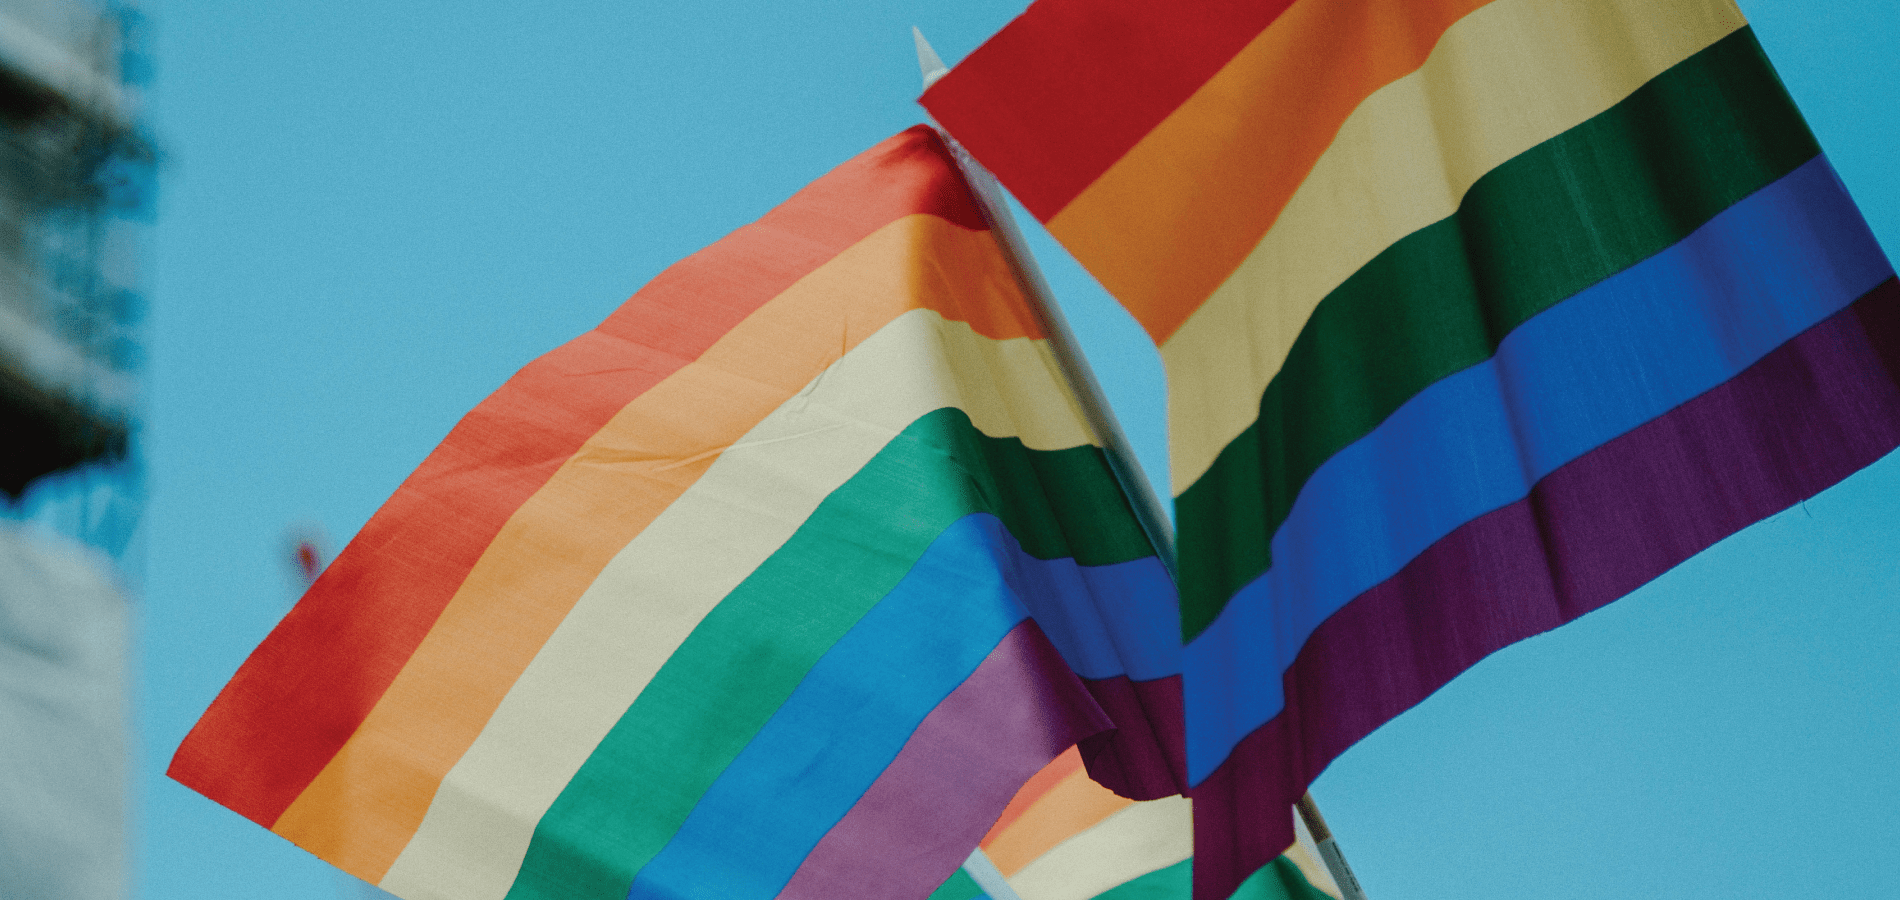 image of LGBTQ+ pride flags